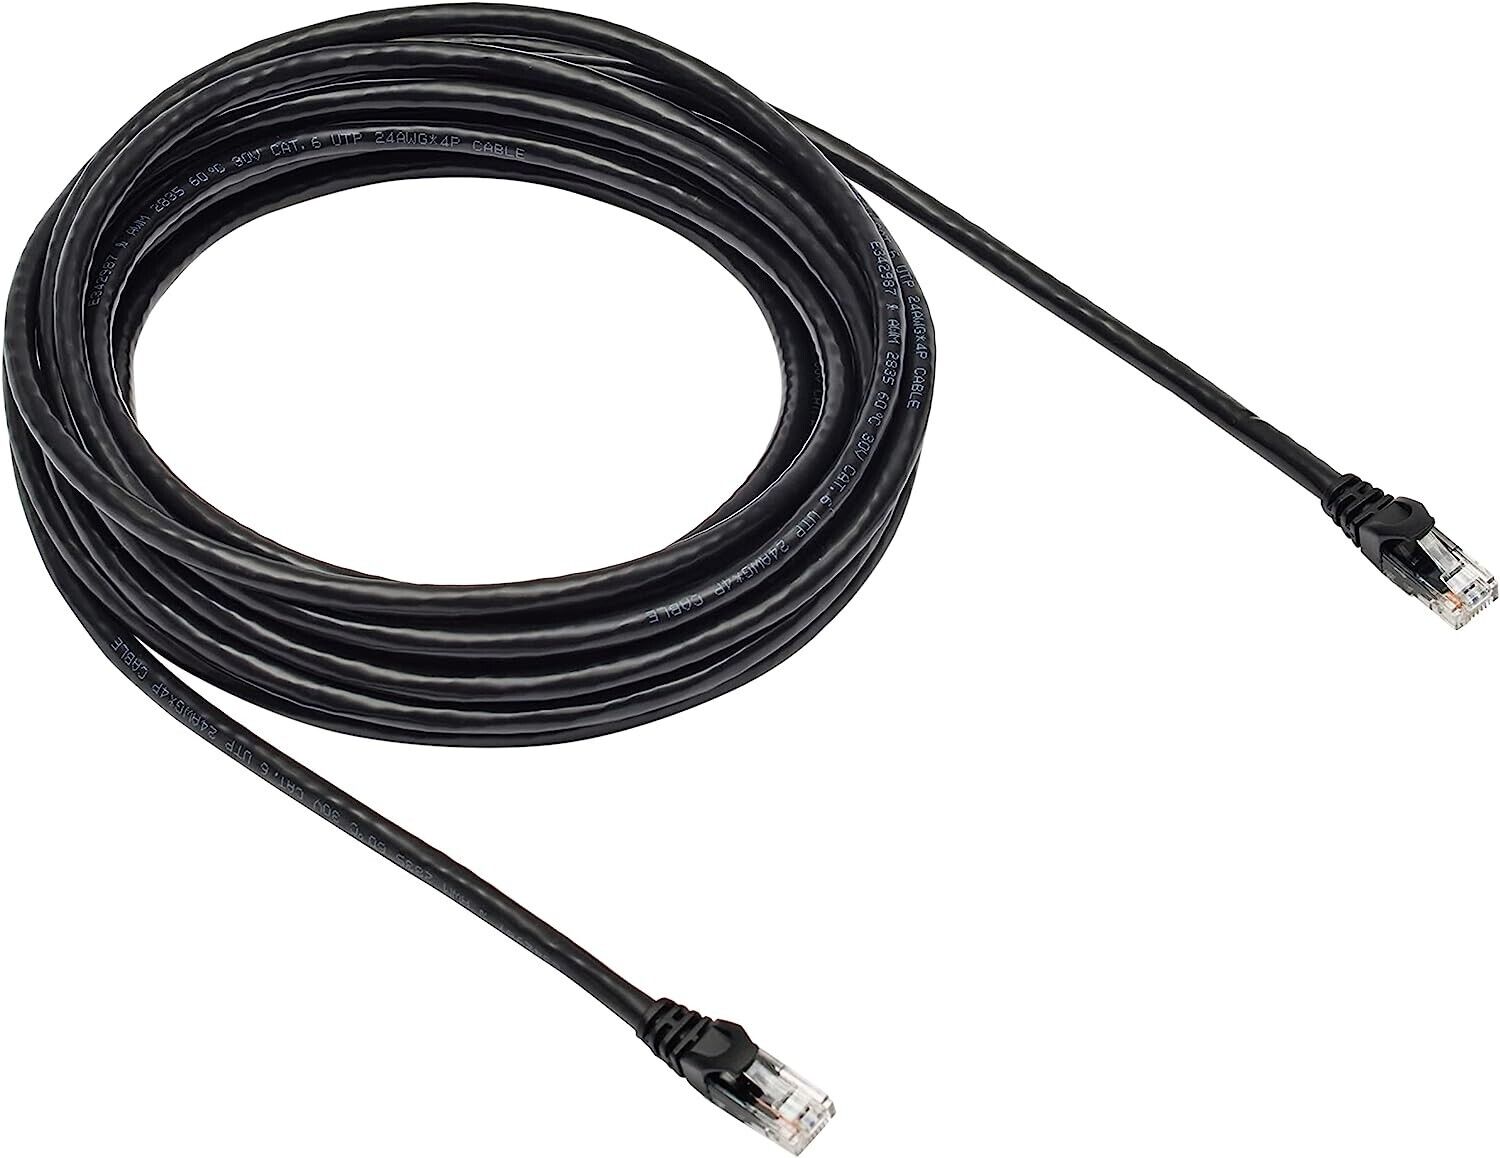 Amazon Basics 10-Pack RJ45 Cat 6 Ethernet Patch Cable 25ft